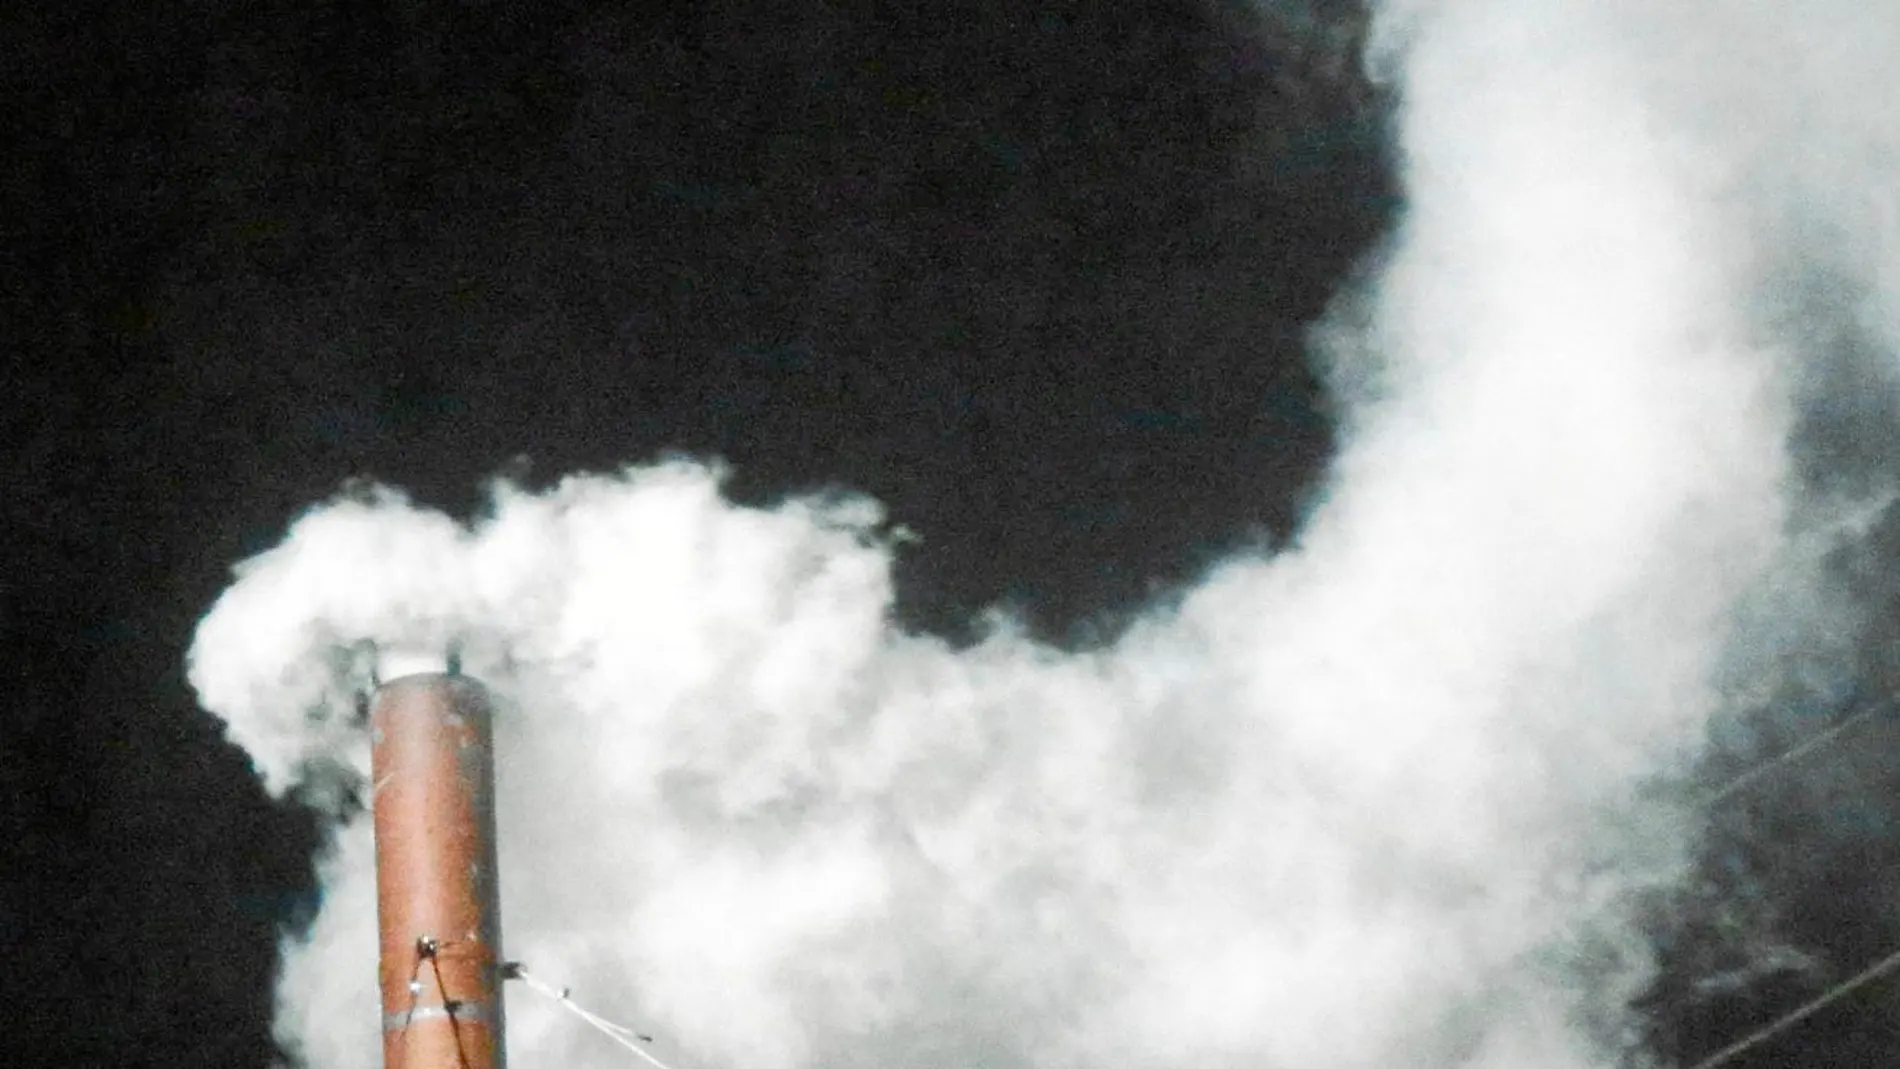 Fumata blanca saliendo de la chimenea de la Capilla Sixtina tras la elección de Bergoglio como Pontífice